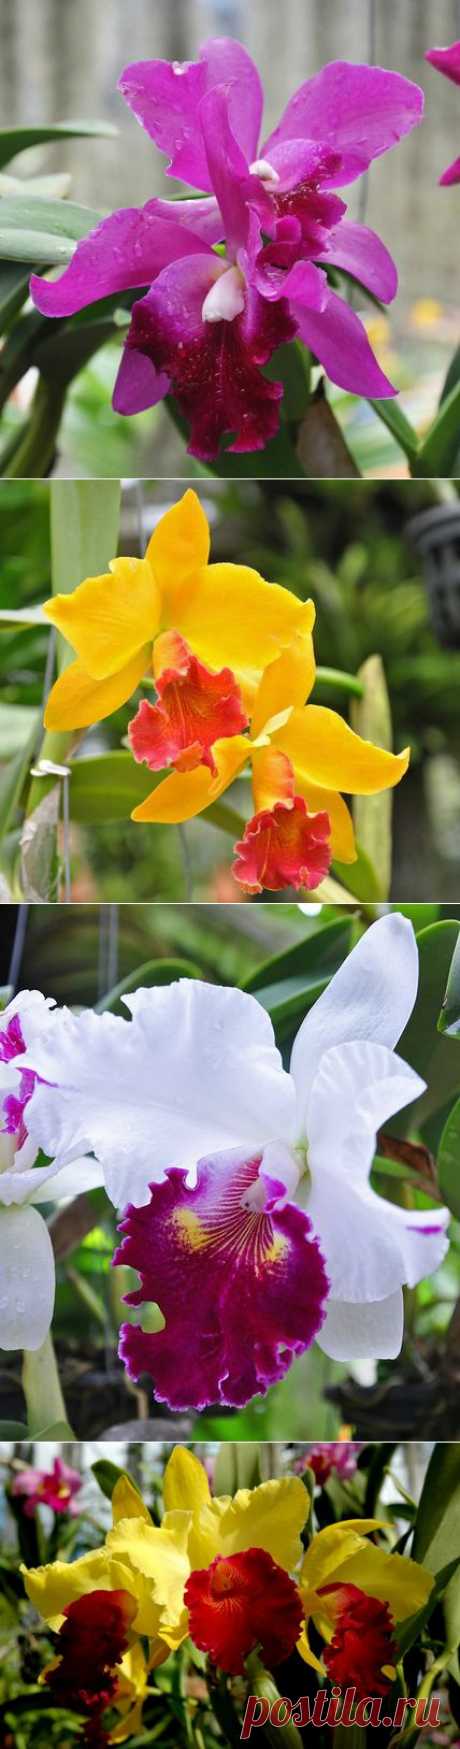 Орхидеи тропического парка Нонг Нуч